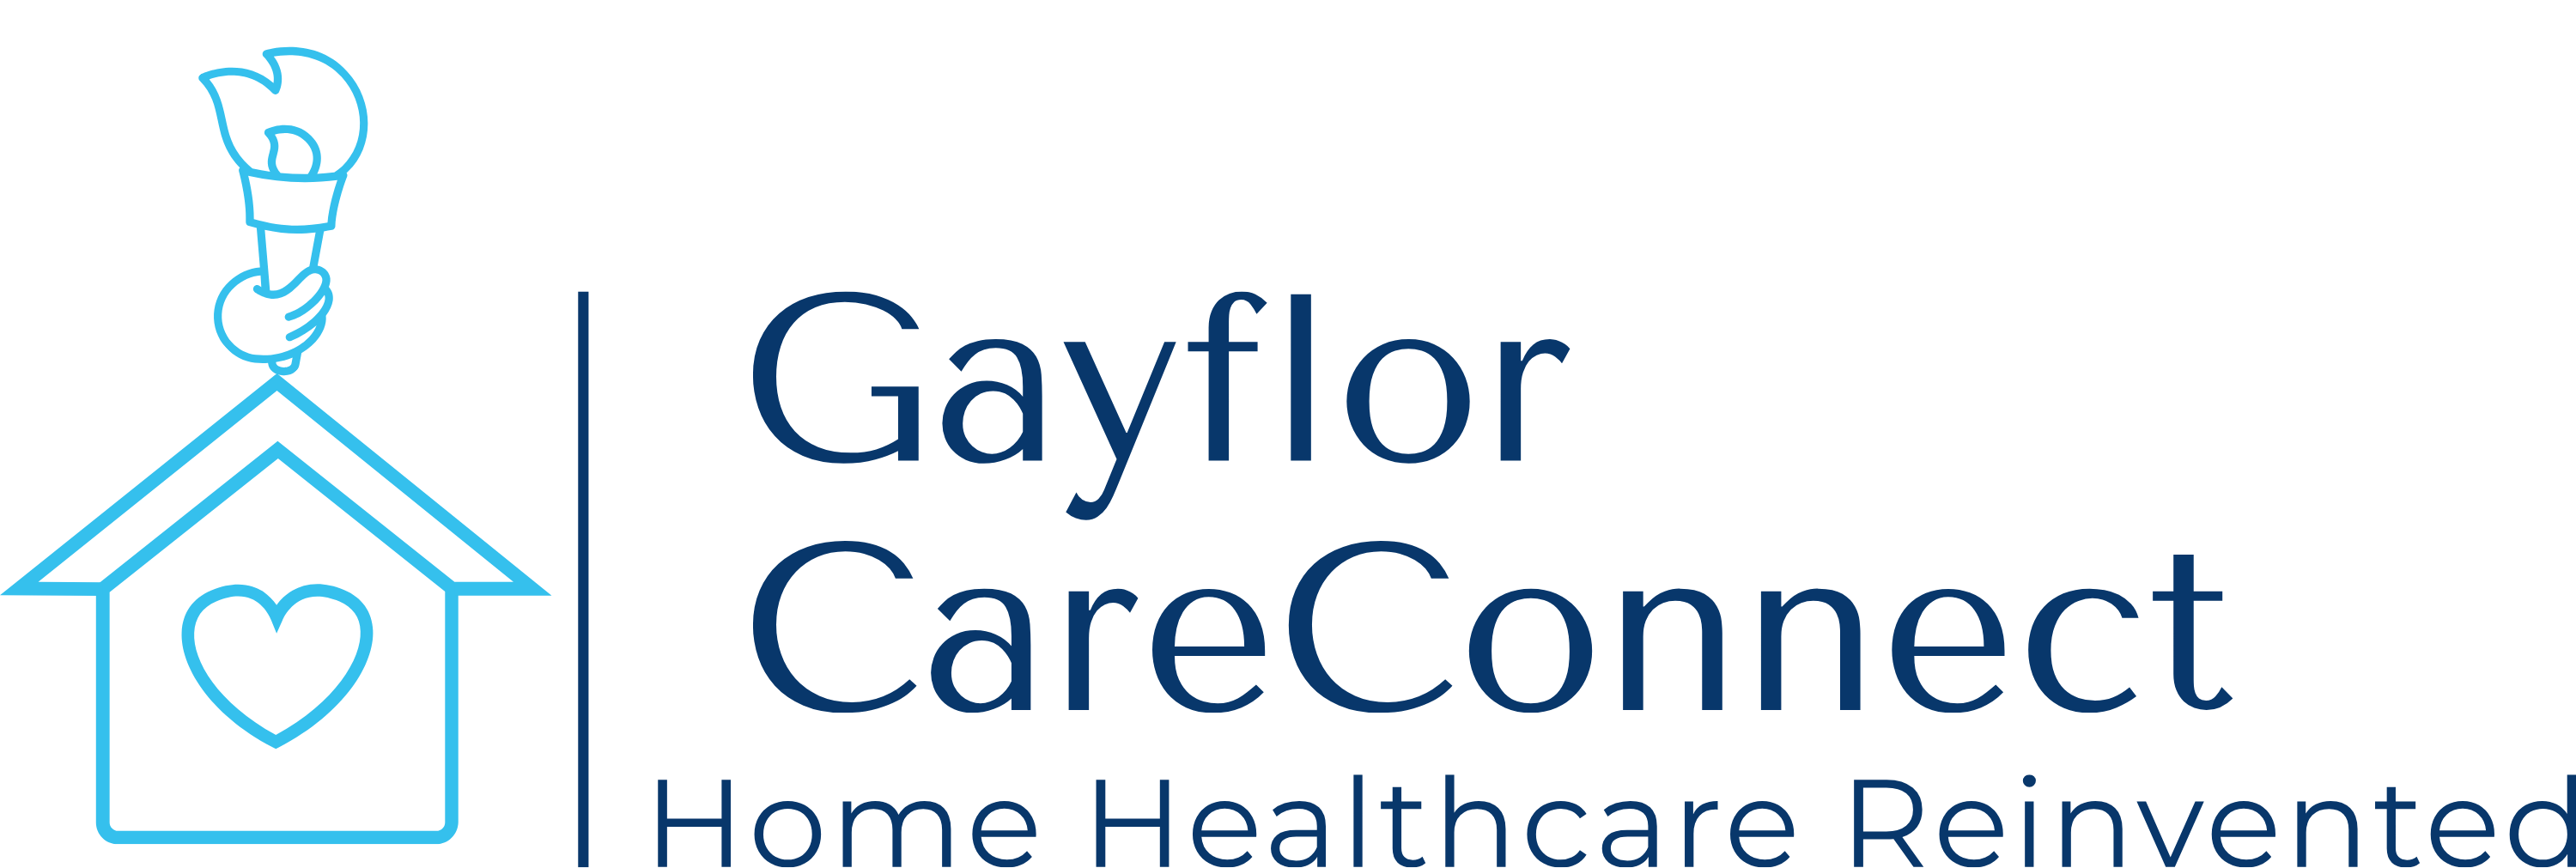 Gayflor CareConnect Team at Manassas, VA